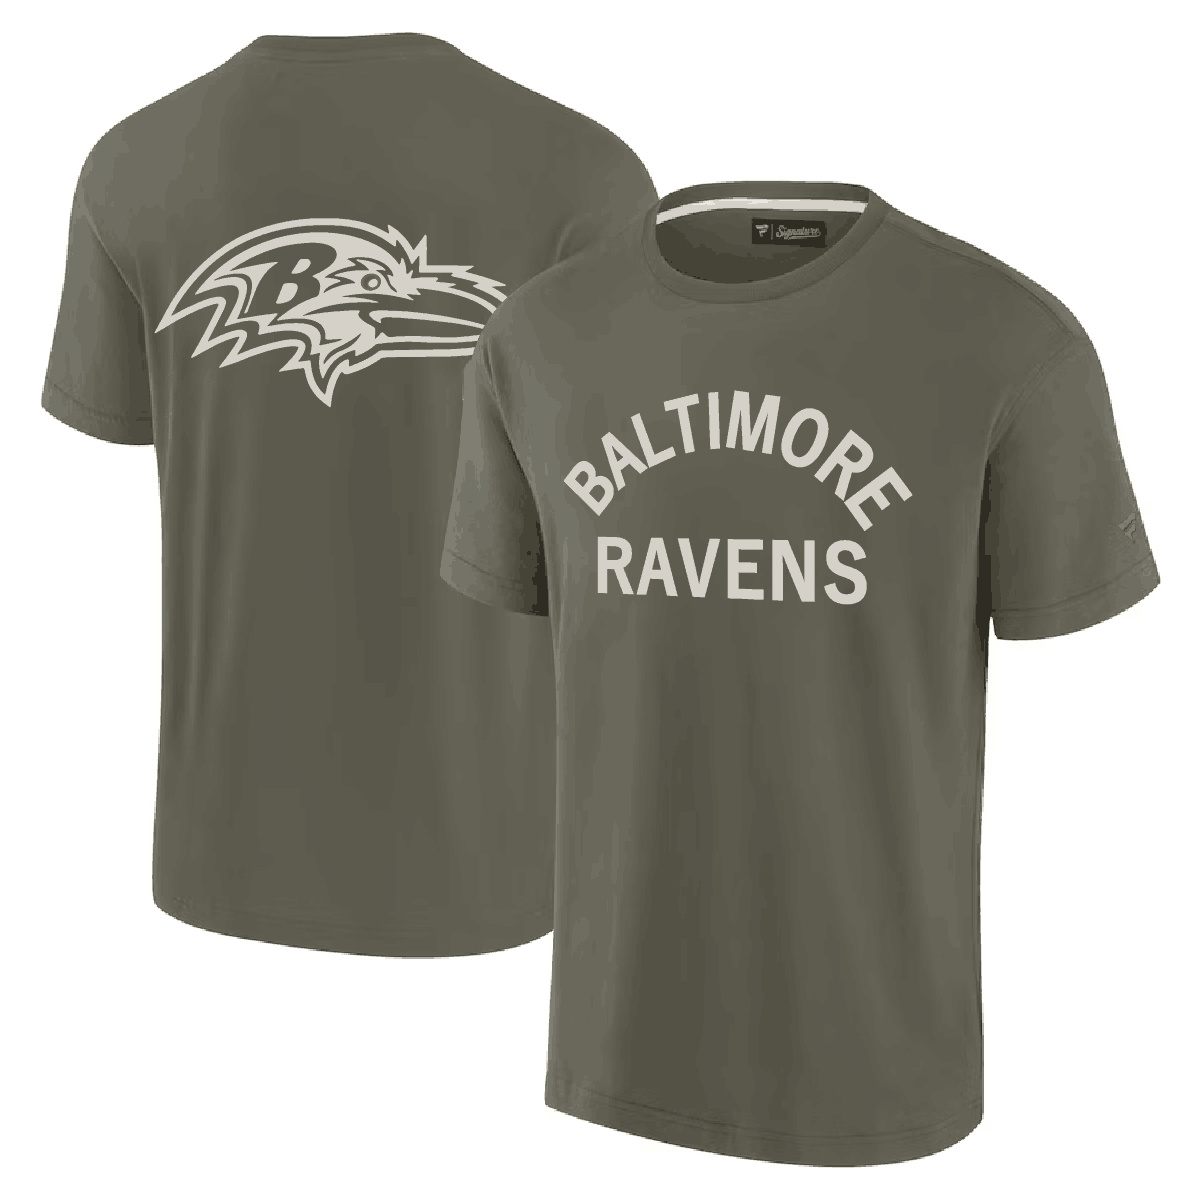 Men's Baltimore Ravens Olive Elements Super Soft T-Shirt